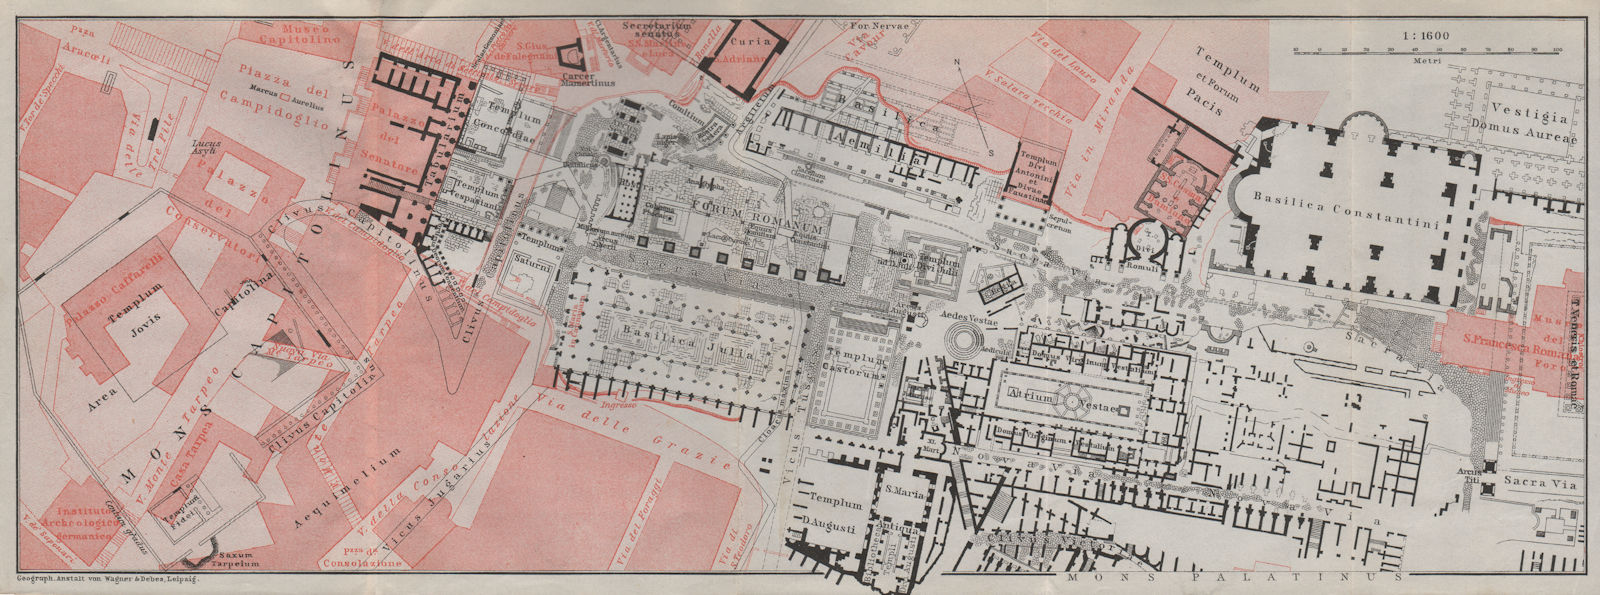 FORUM ROMANUM ground plan. Rome. Roman Forum mappa. BAEDEKER 1909 old